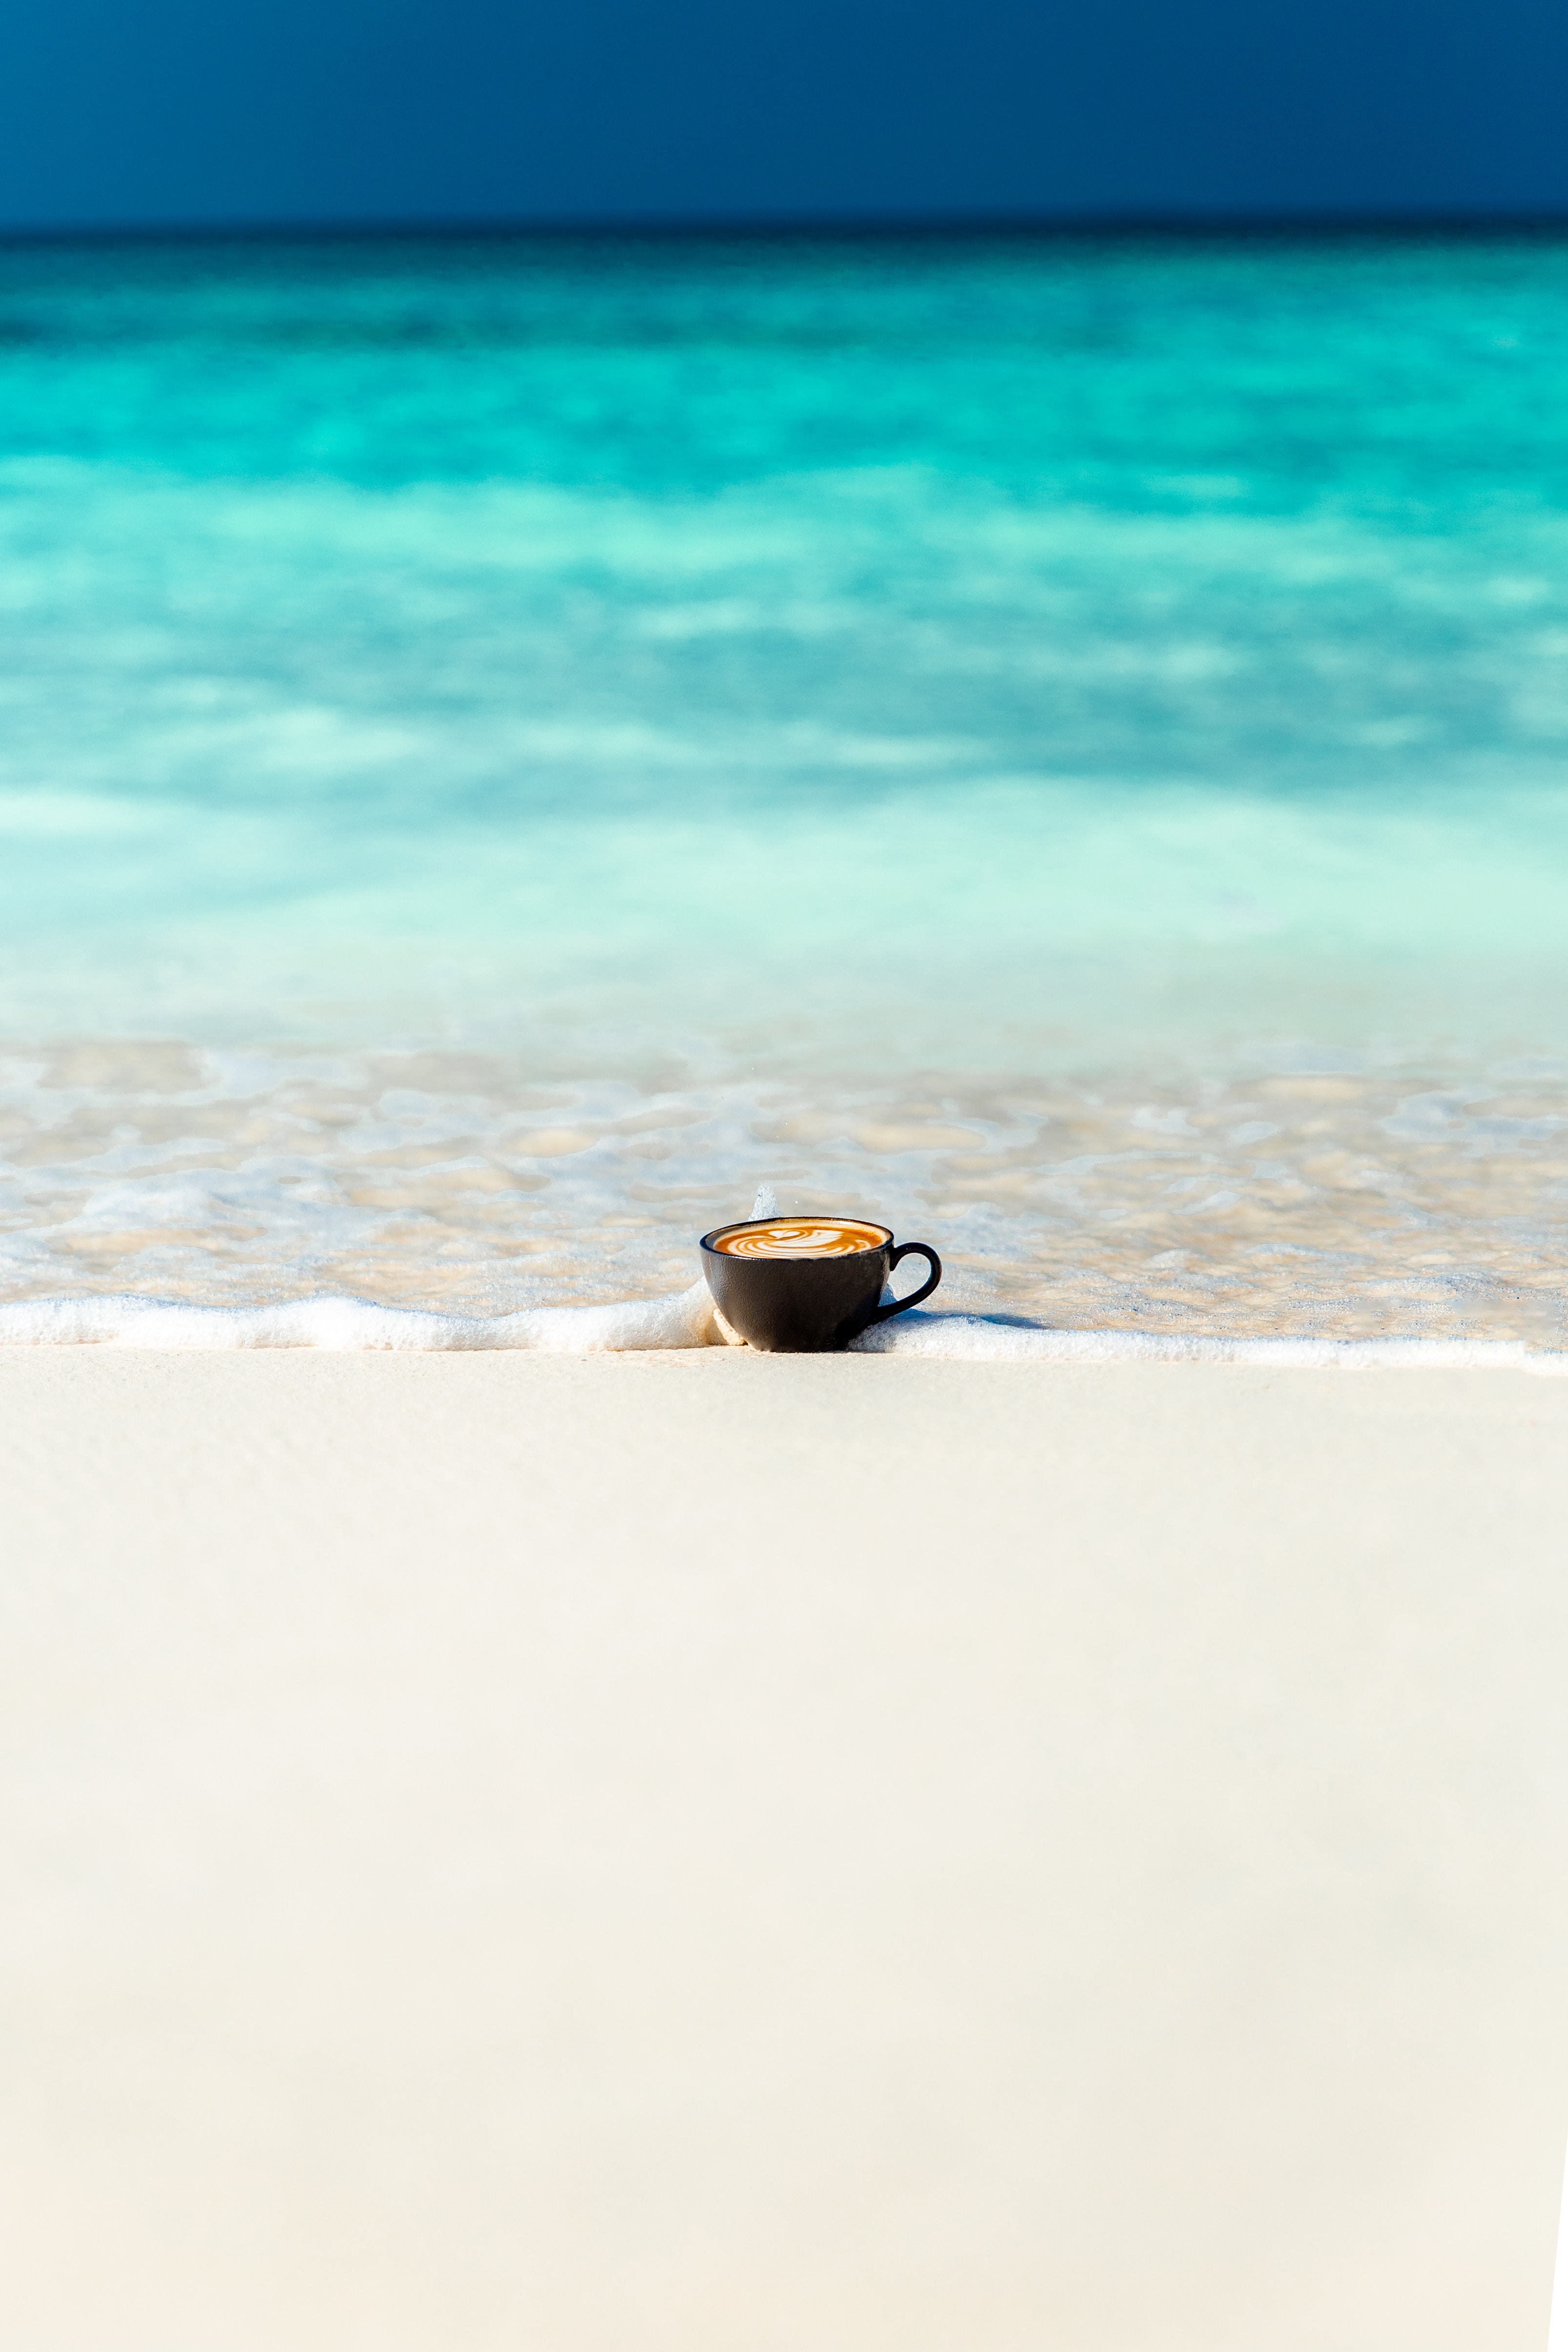 bank, minimalism, sand, shore, cup, ocean Full HD